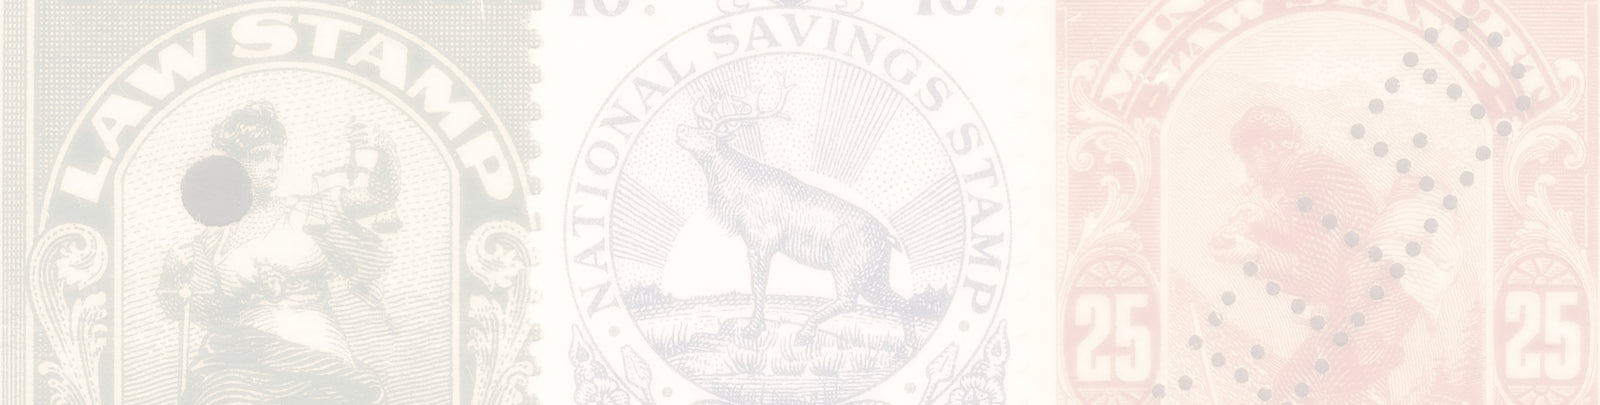 Canadian Provincial Revenue Stamps - Ontario, Alberta & More 